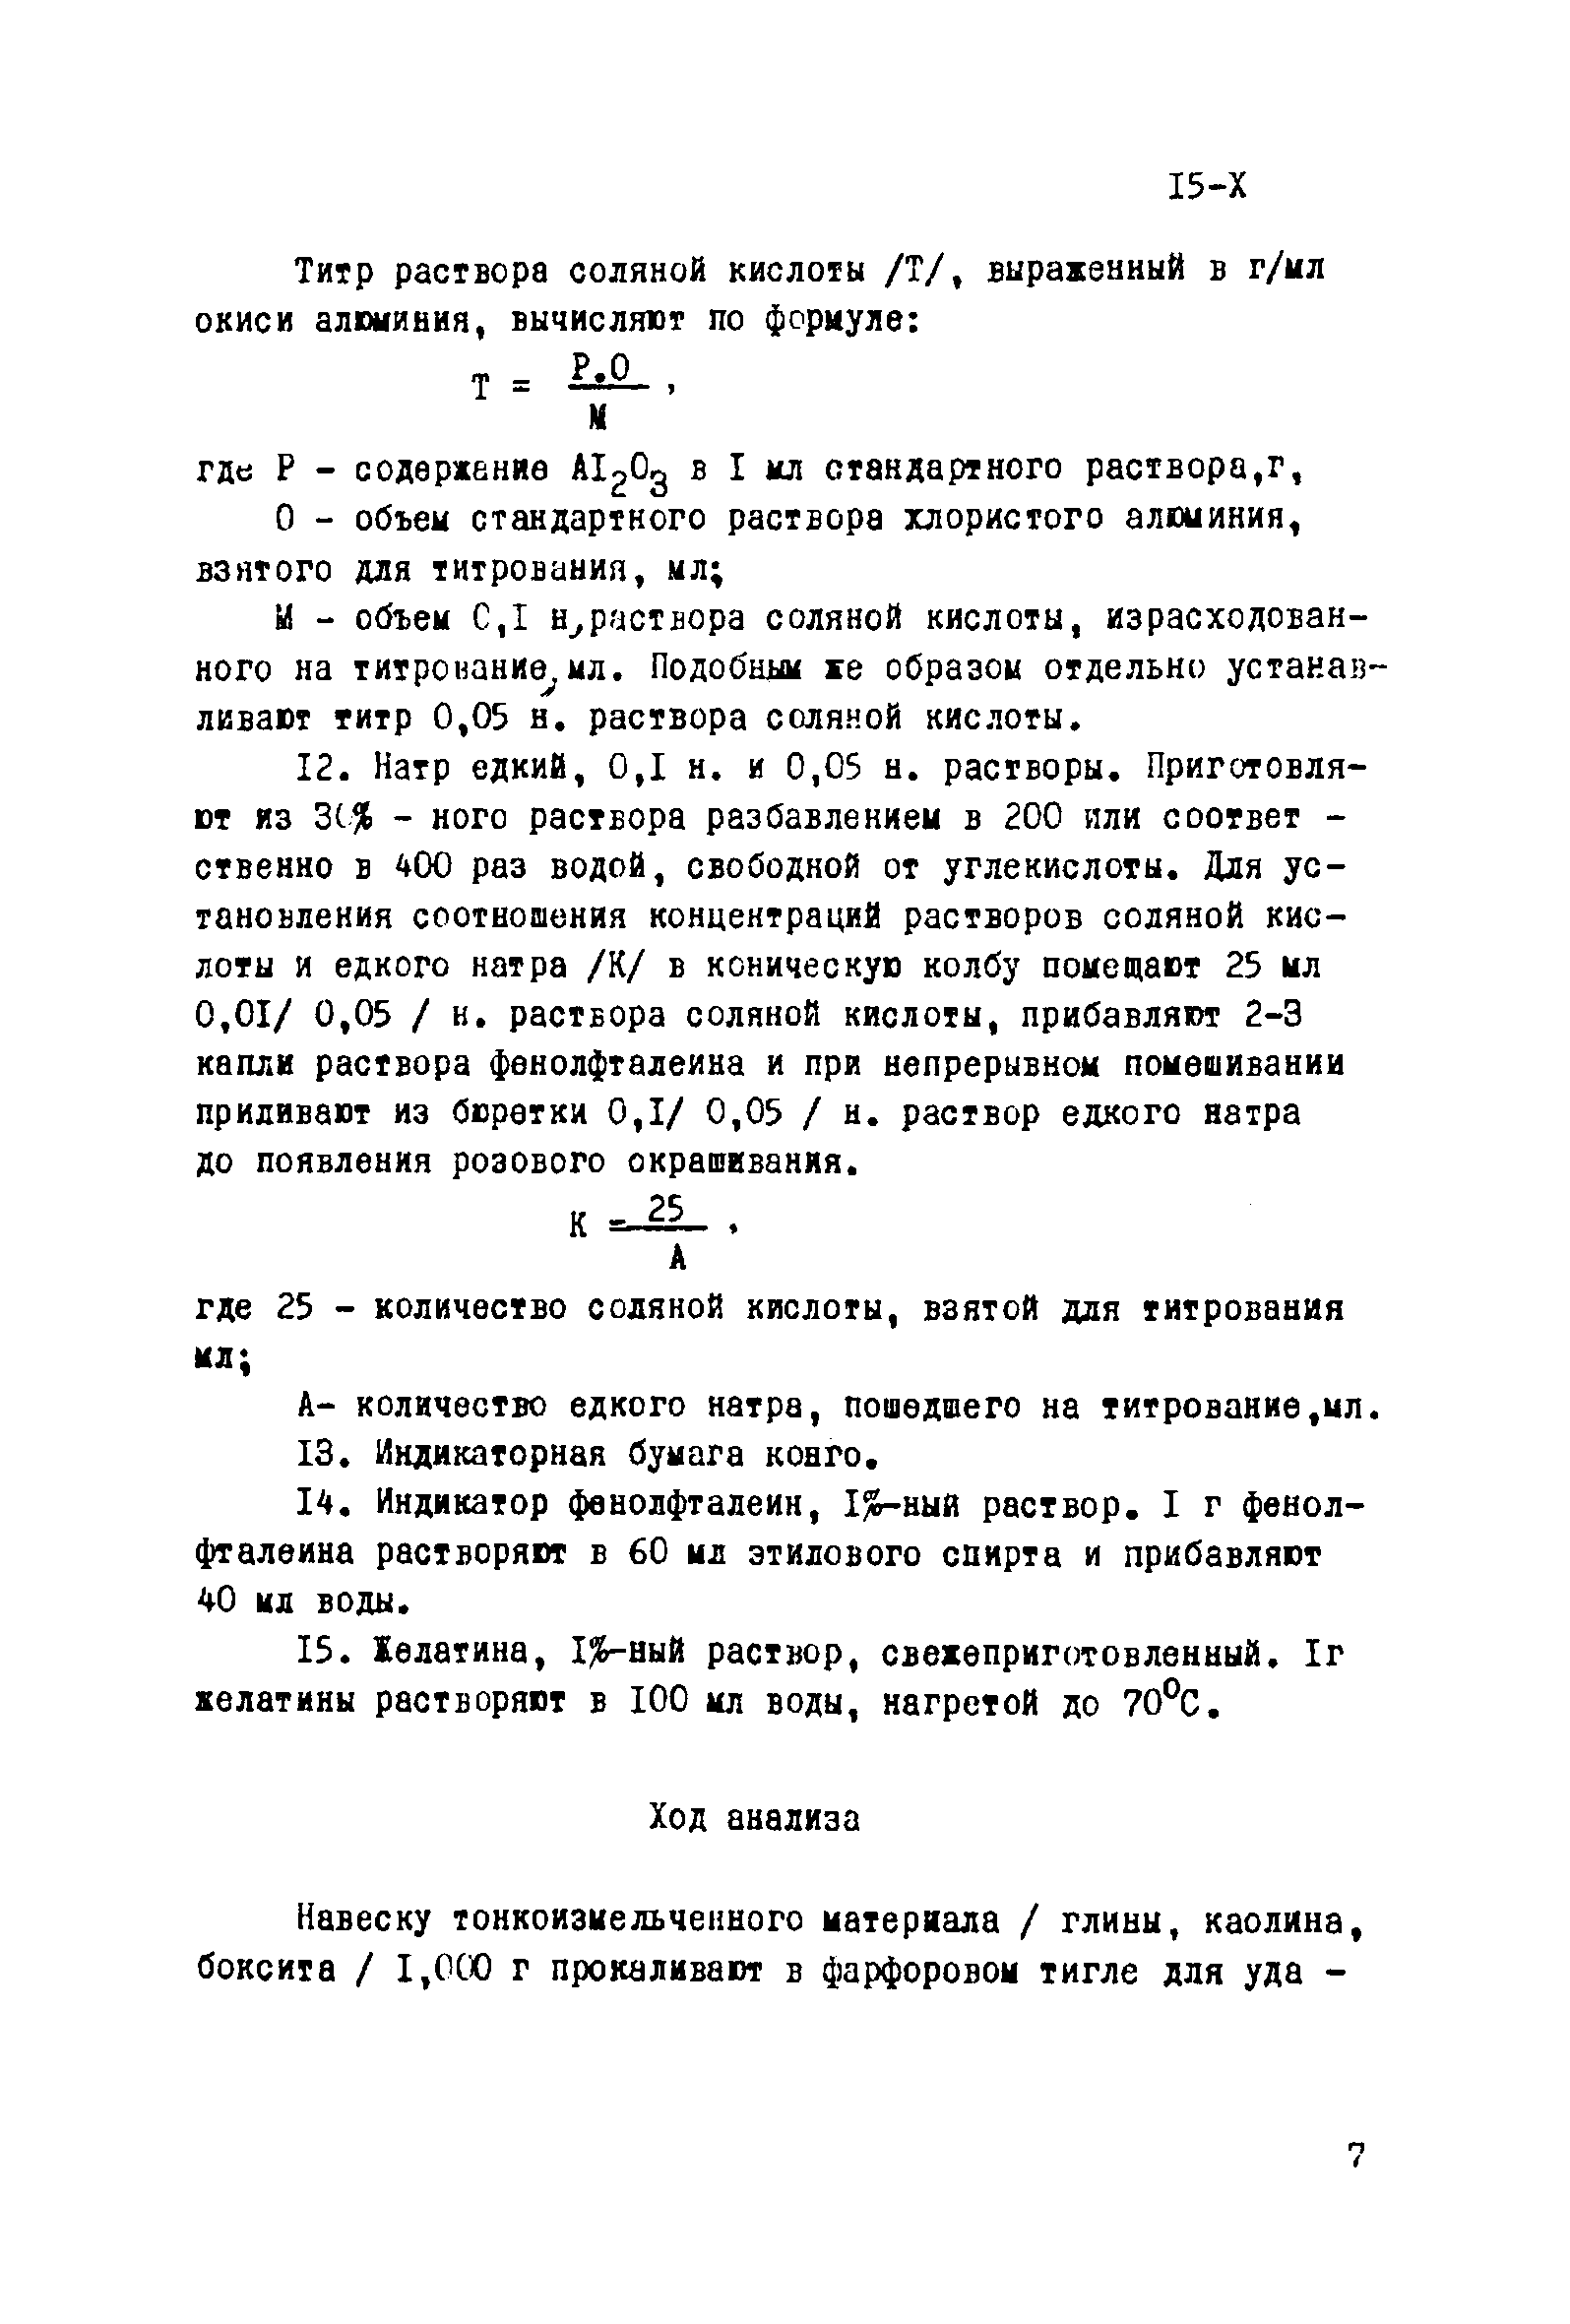 Инструкция НСАМ 15-Х